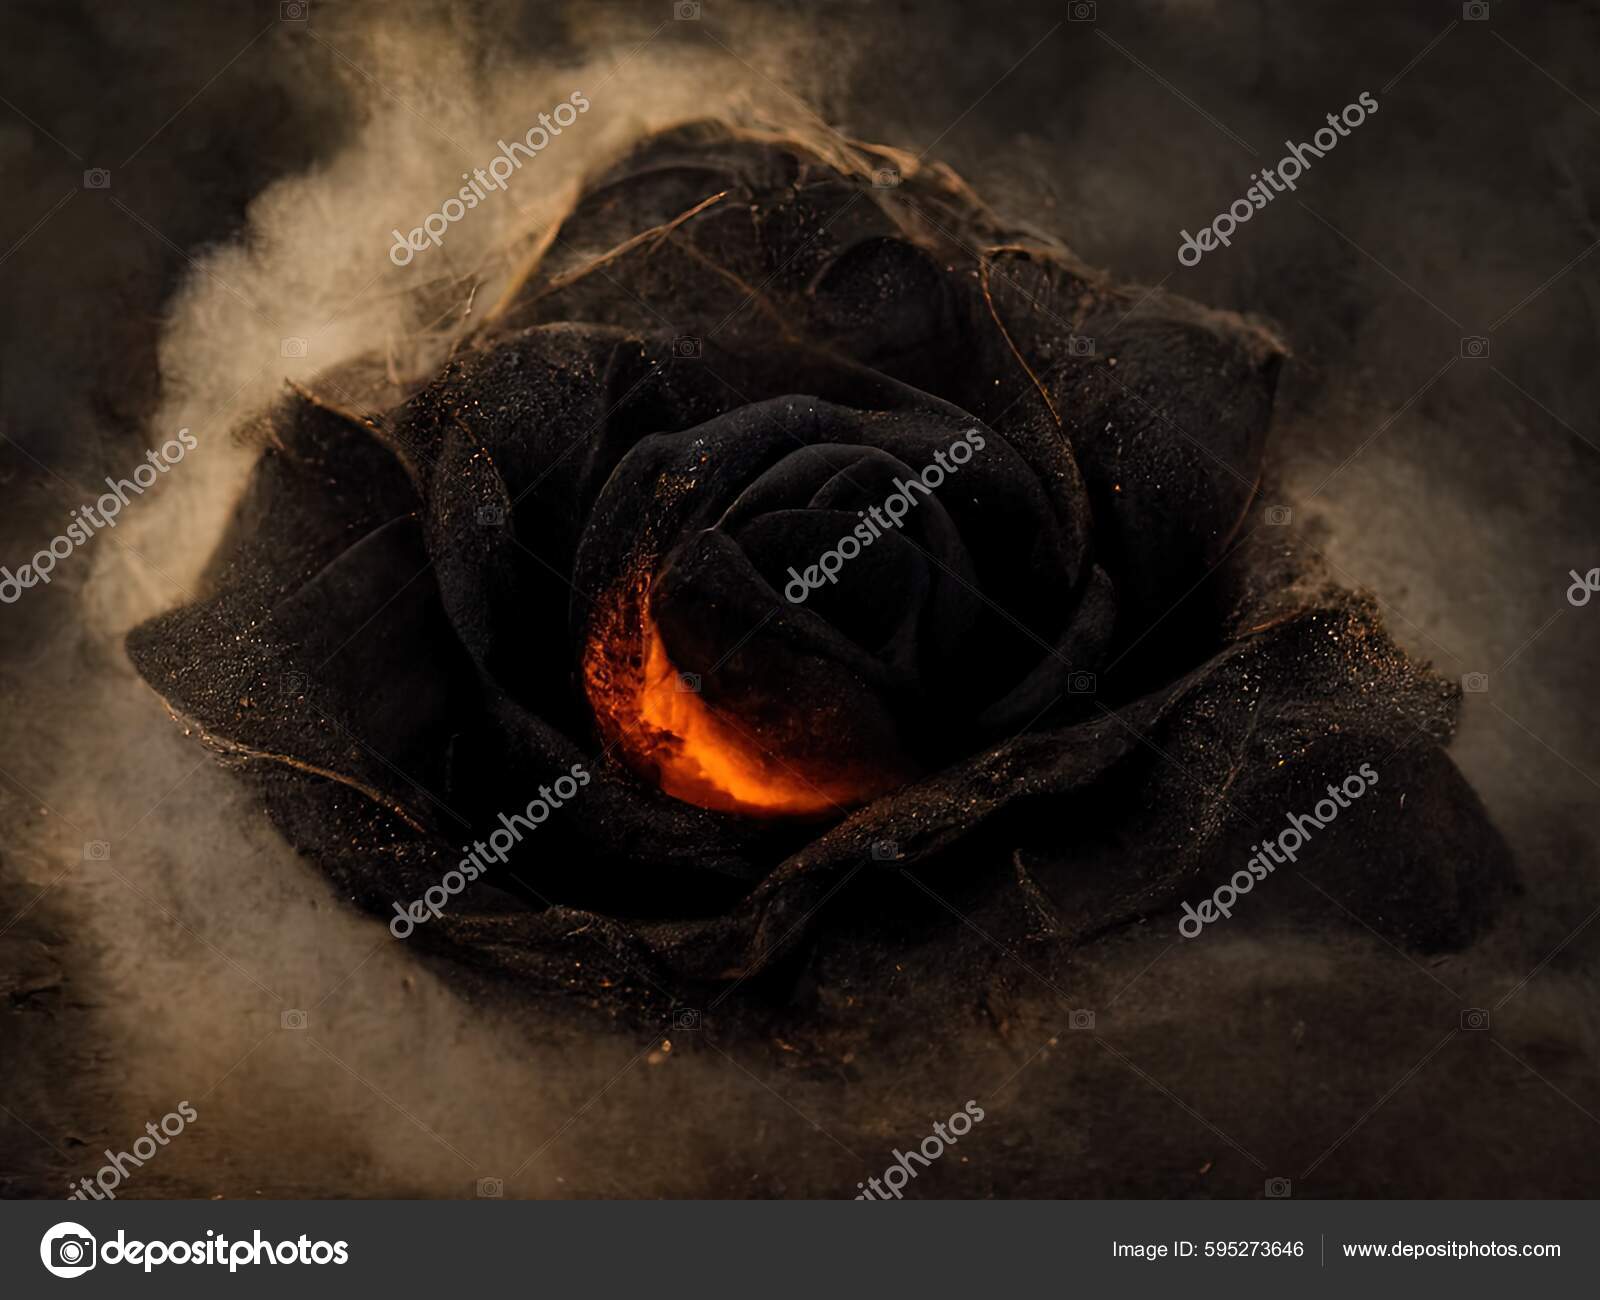 Dark rose Stock Photos, Royalty Free Dark rose Images | Depositphotos